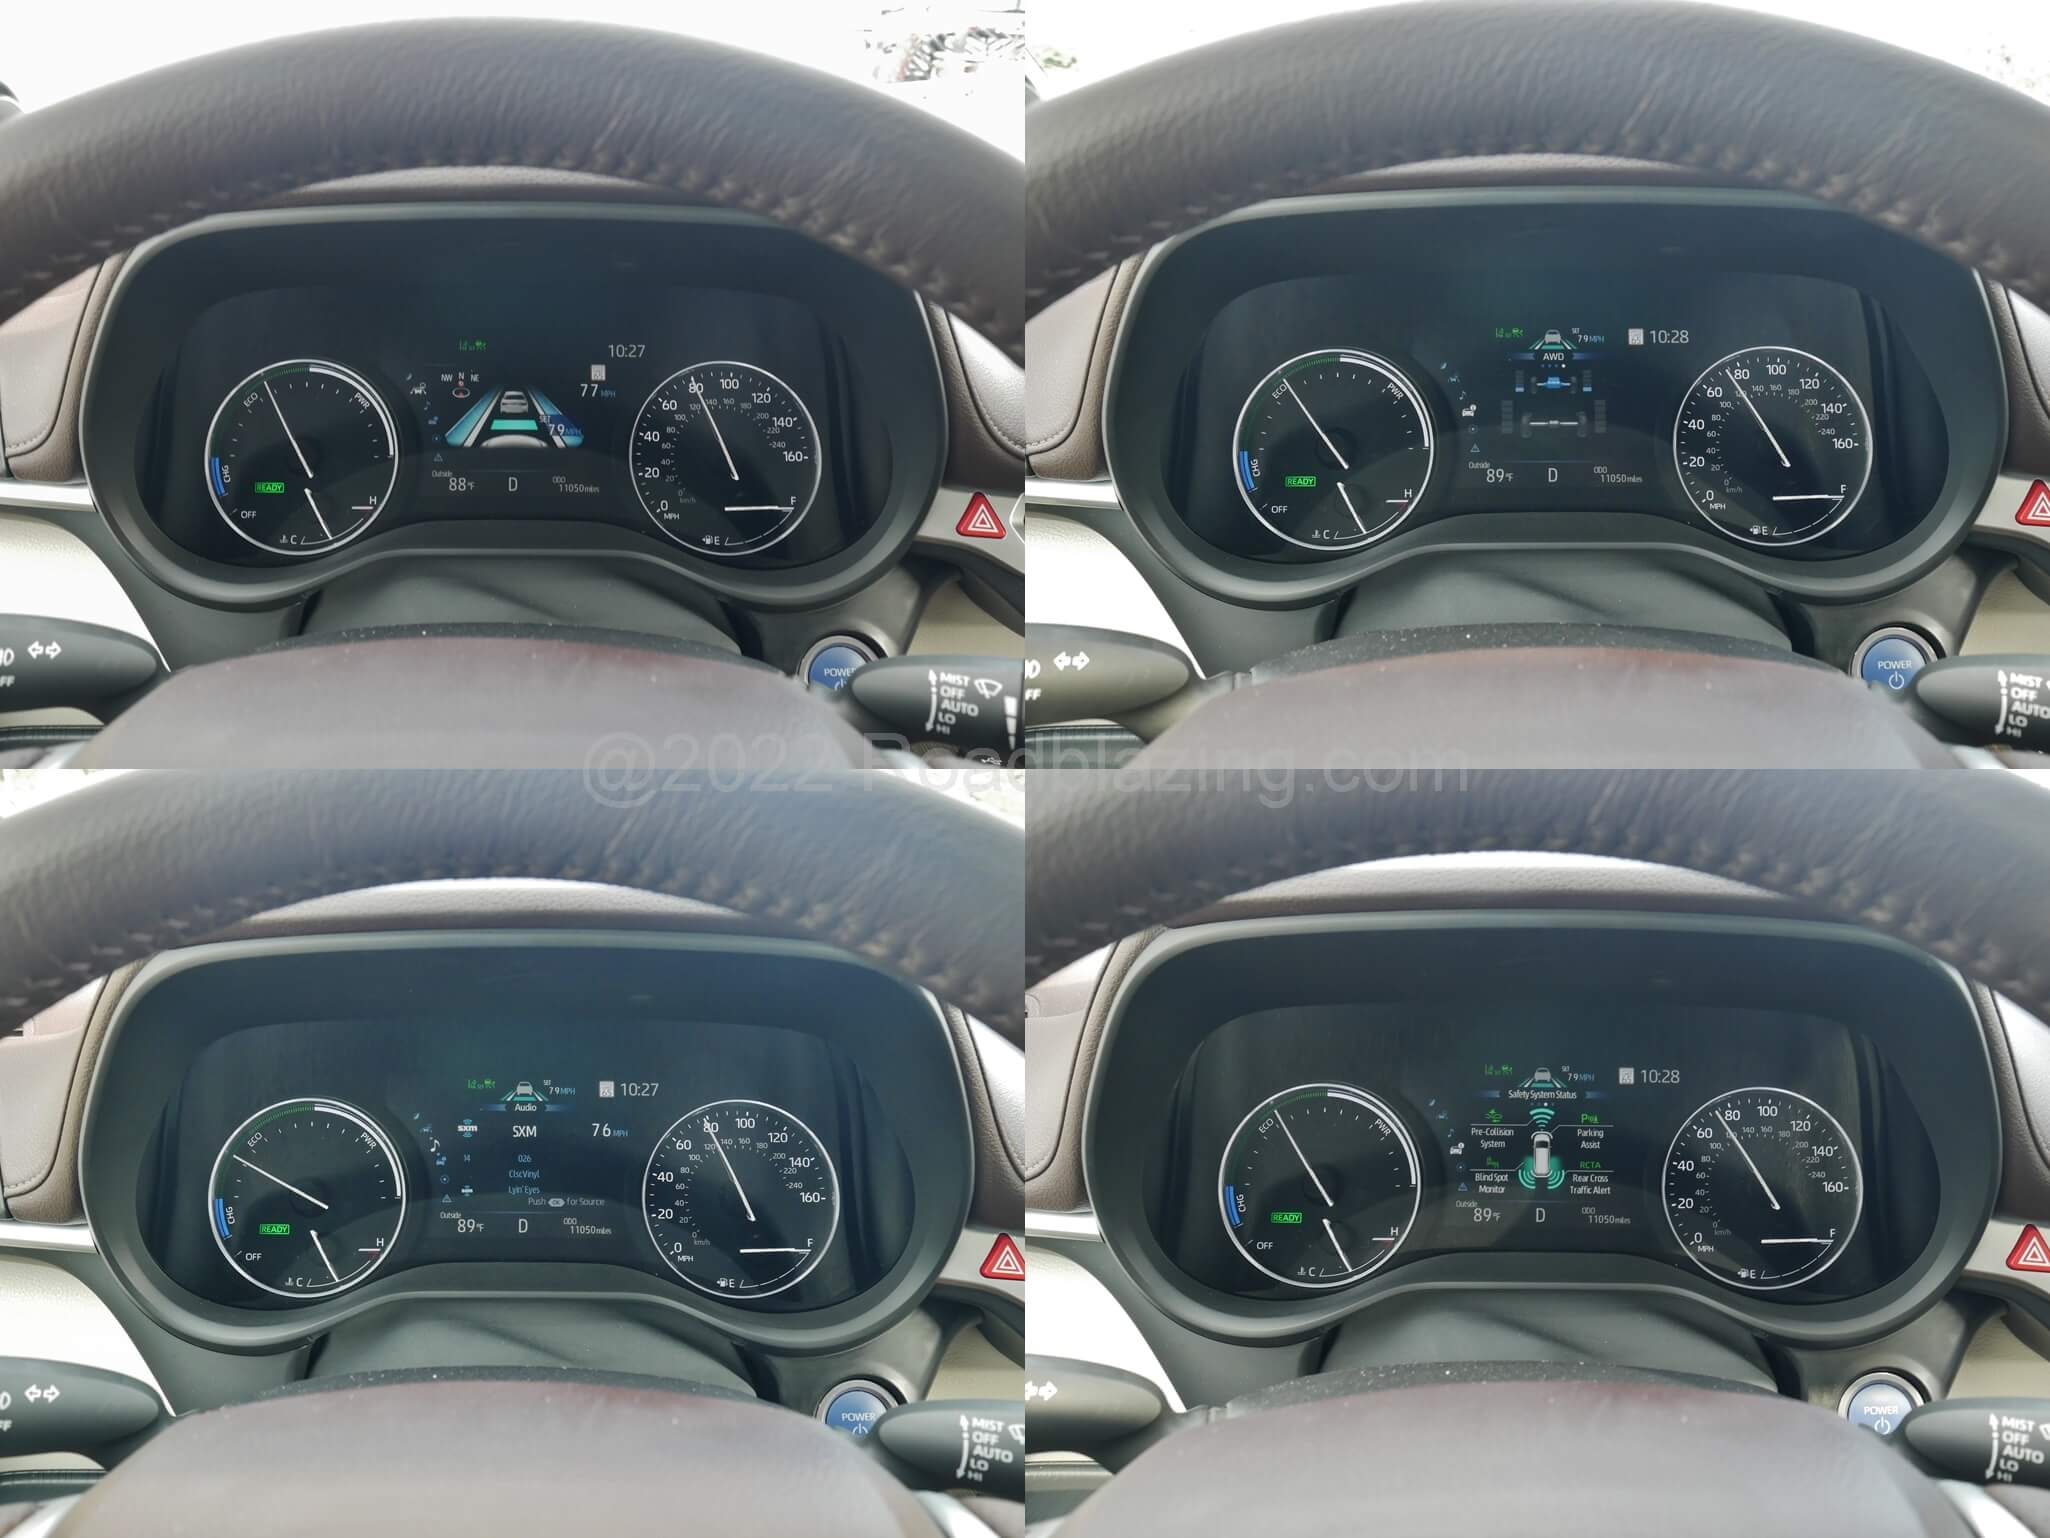 2021 Toyota Sienna Hybrid Platinum AWD: Toyota Safety Sense P 2.0 standard features enhanced driver assistance